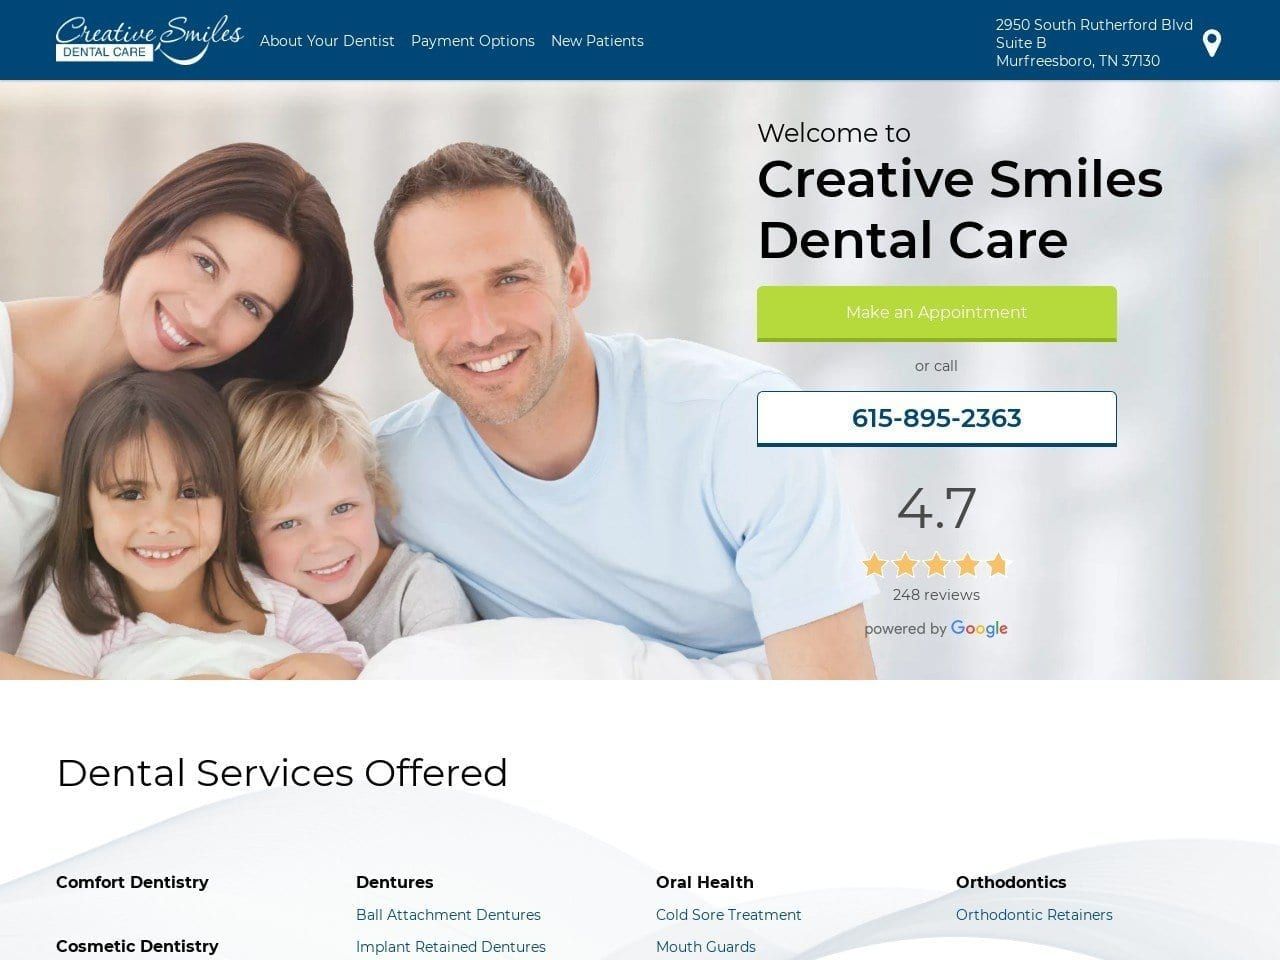 Creative Smiles Website Screenshot from creativesmilesmurfreesboro.com